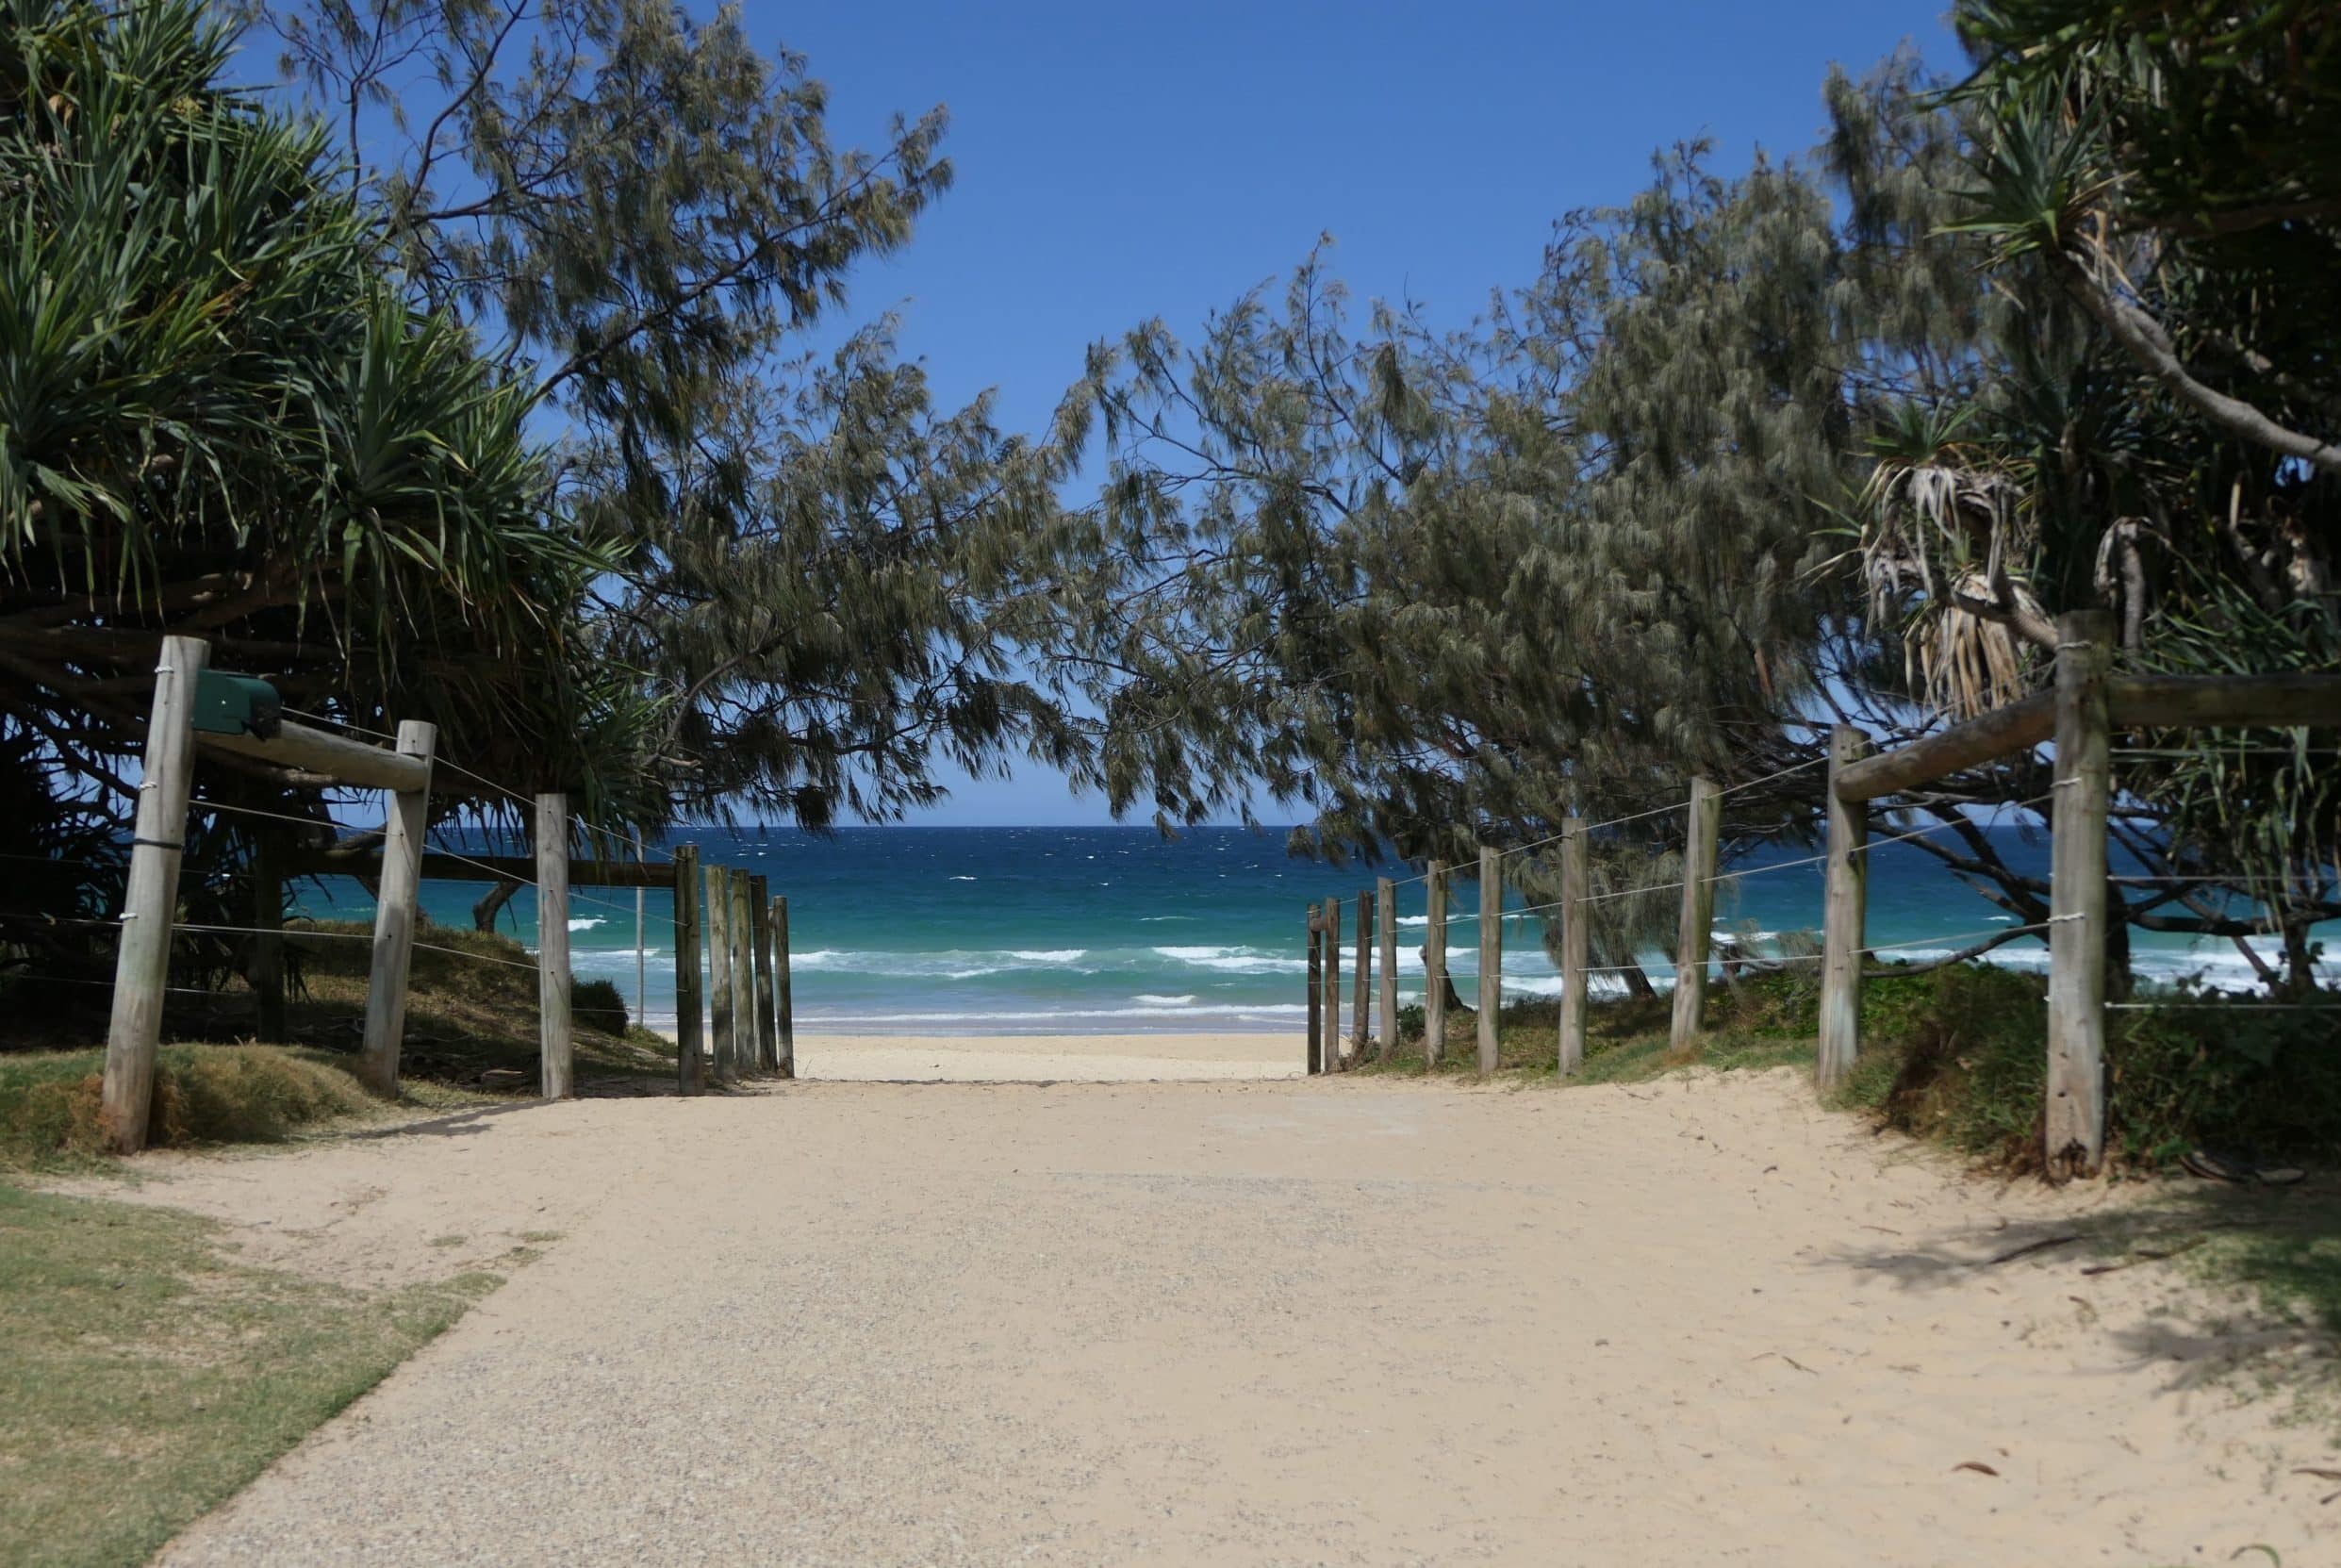 A beach entrance at the Sunshine Coast